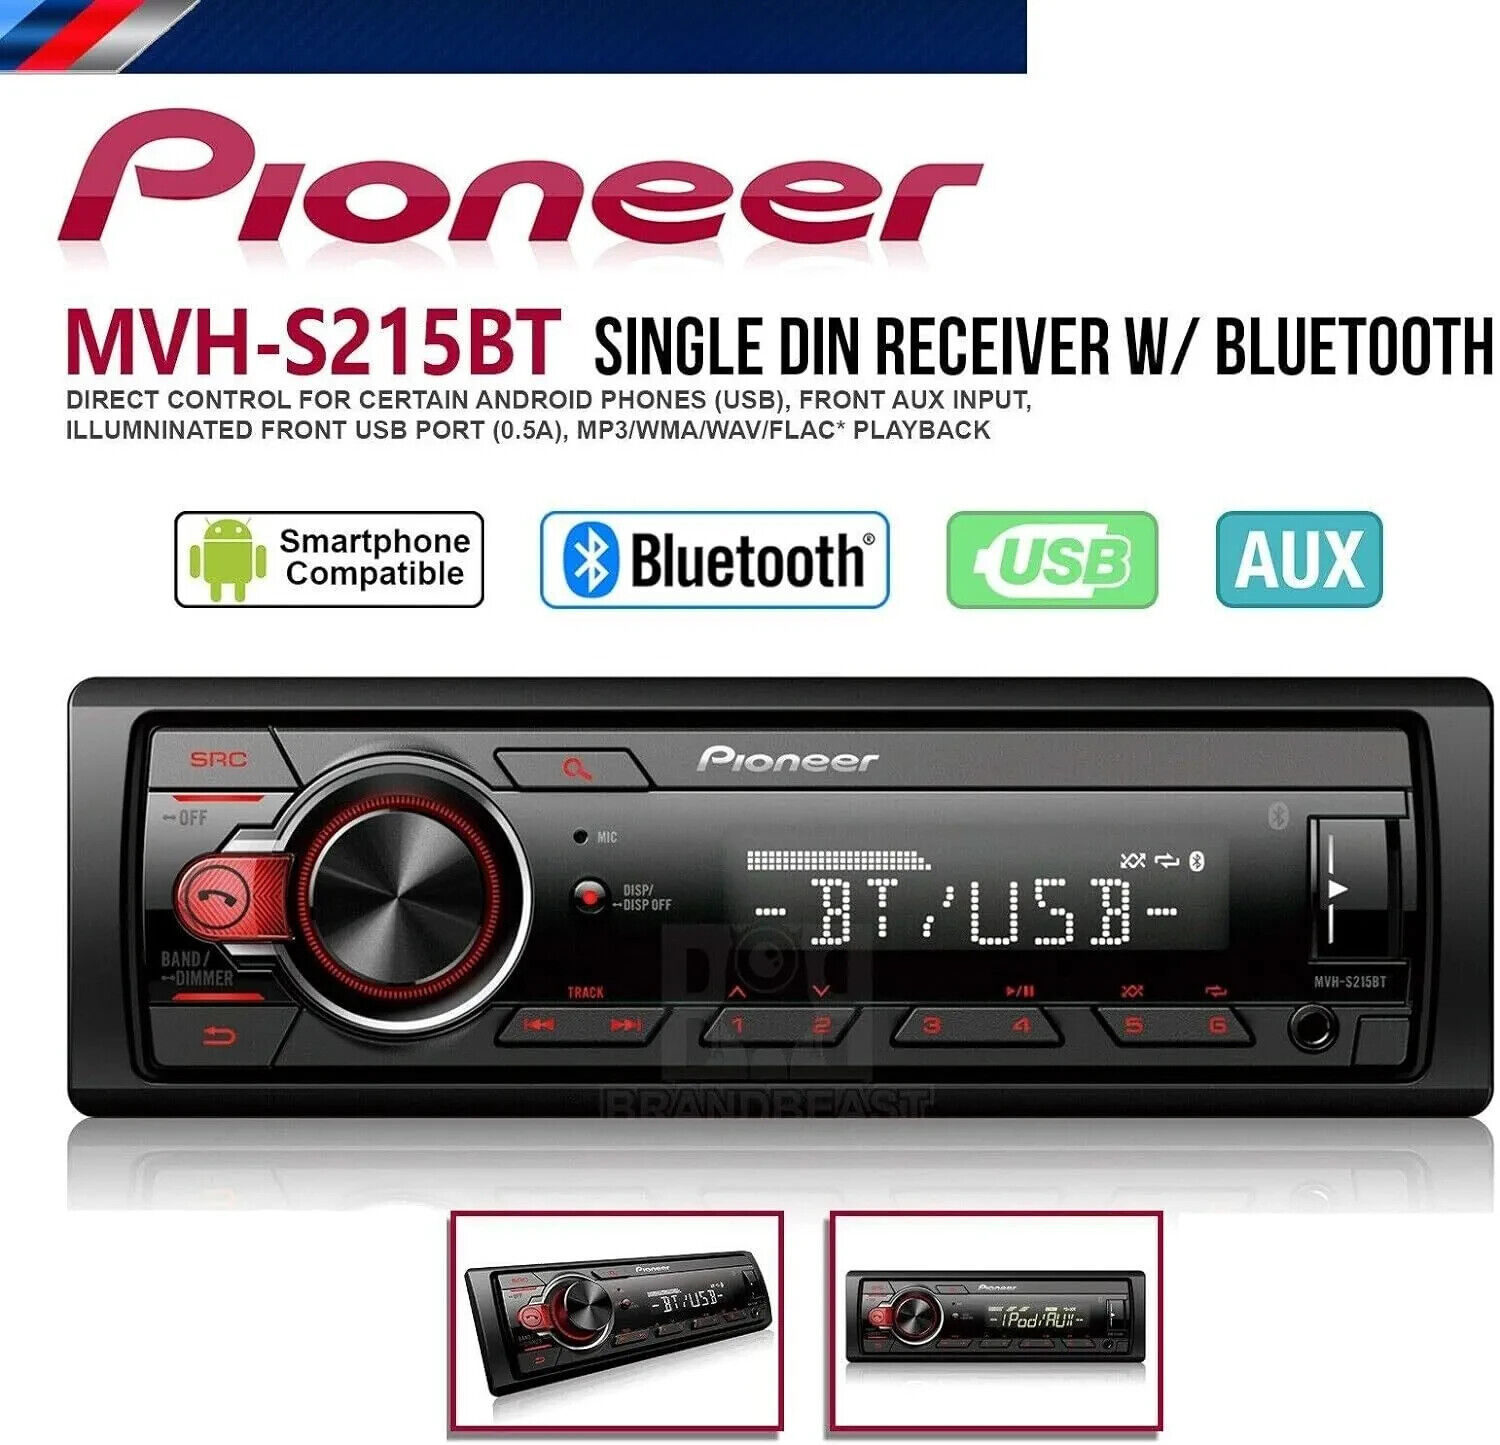 Pioneer MVH-S215BT Stereo Single DIN Bluetooth In-Dash USB MP3 Auxiliary AM/FM